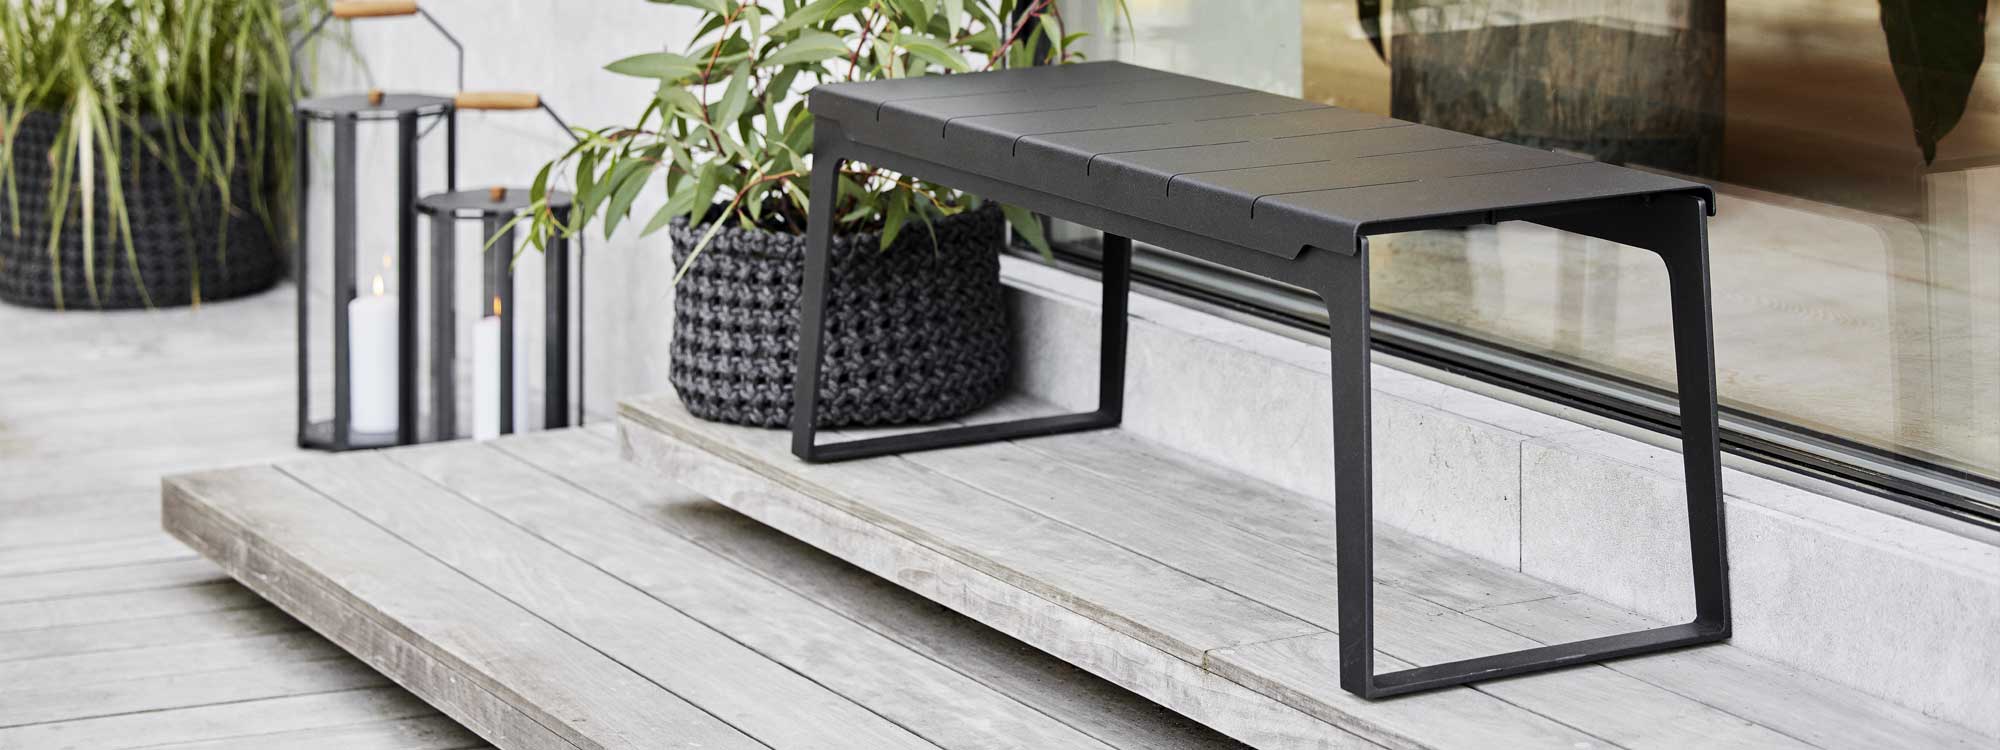 Image of Copenhagen aluminum garden bench in Lava-Grey by Cane-line outdoor furniture